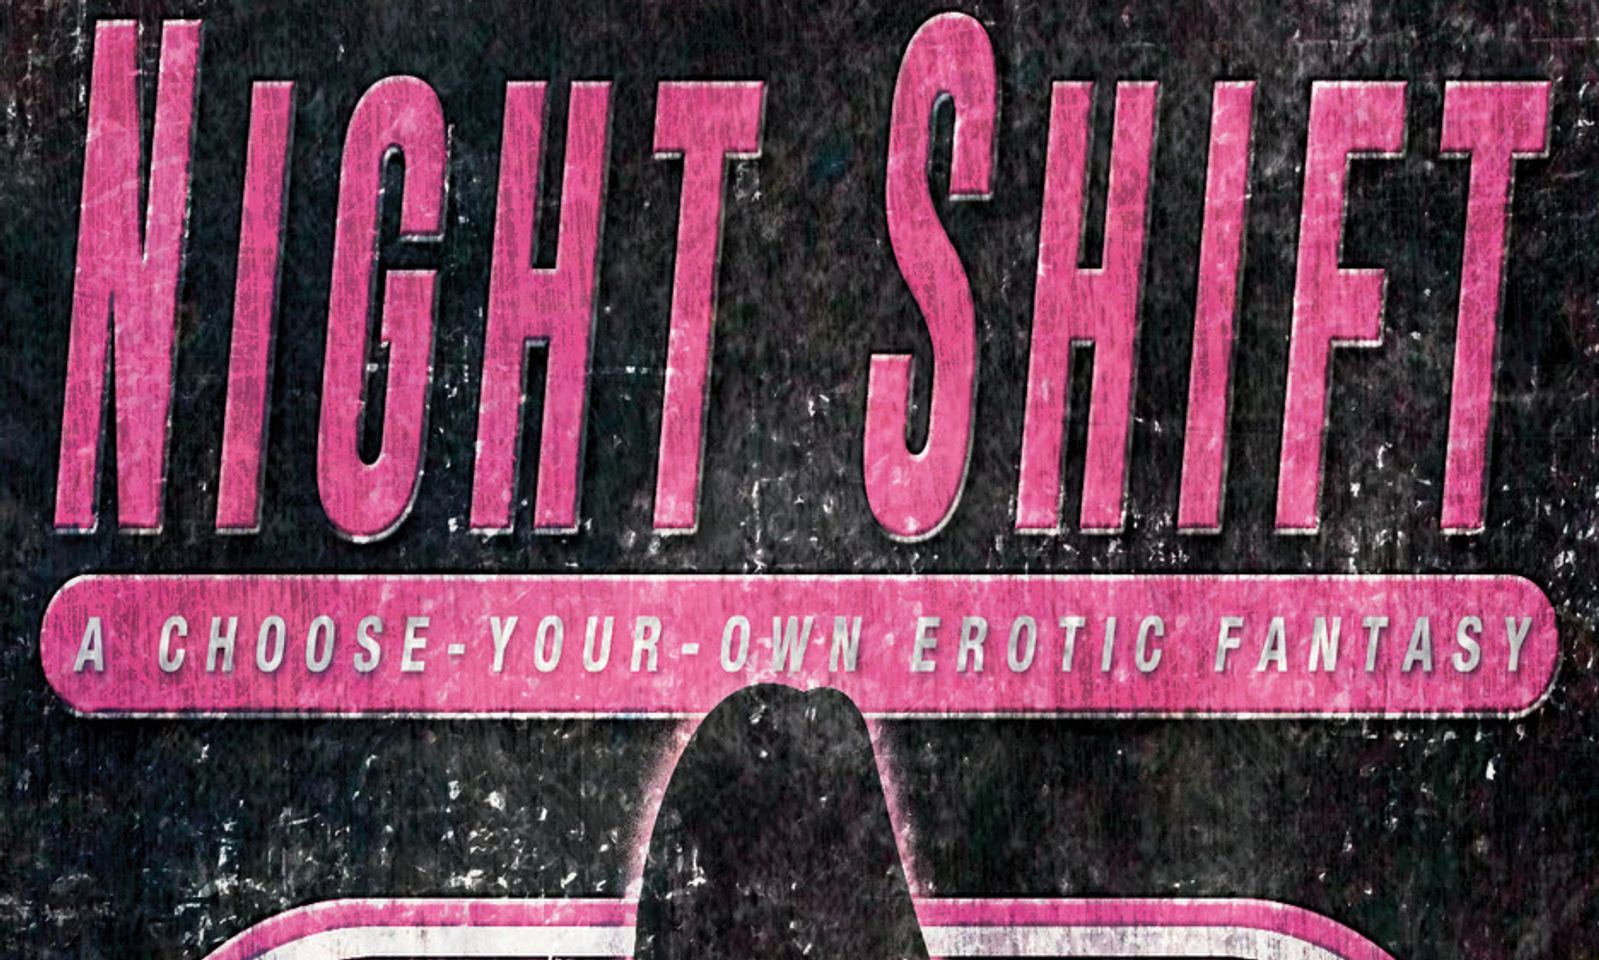 Joanna Angel's 'Night Shift' Becomes Amazon Bestseller